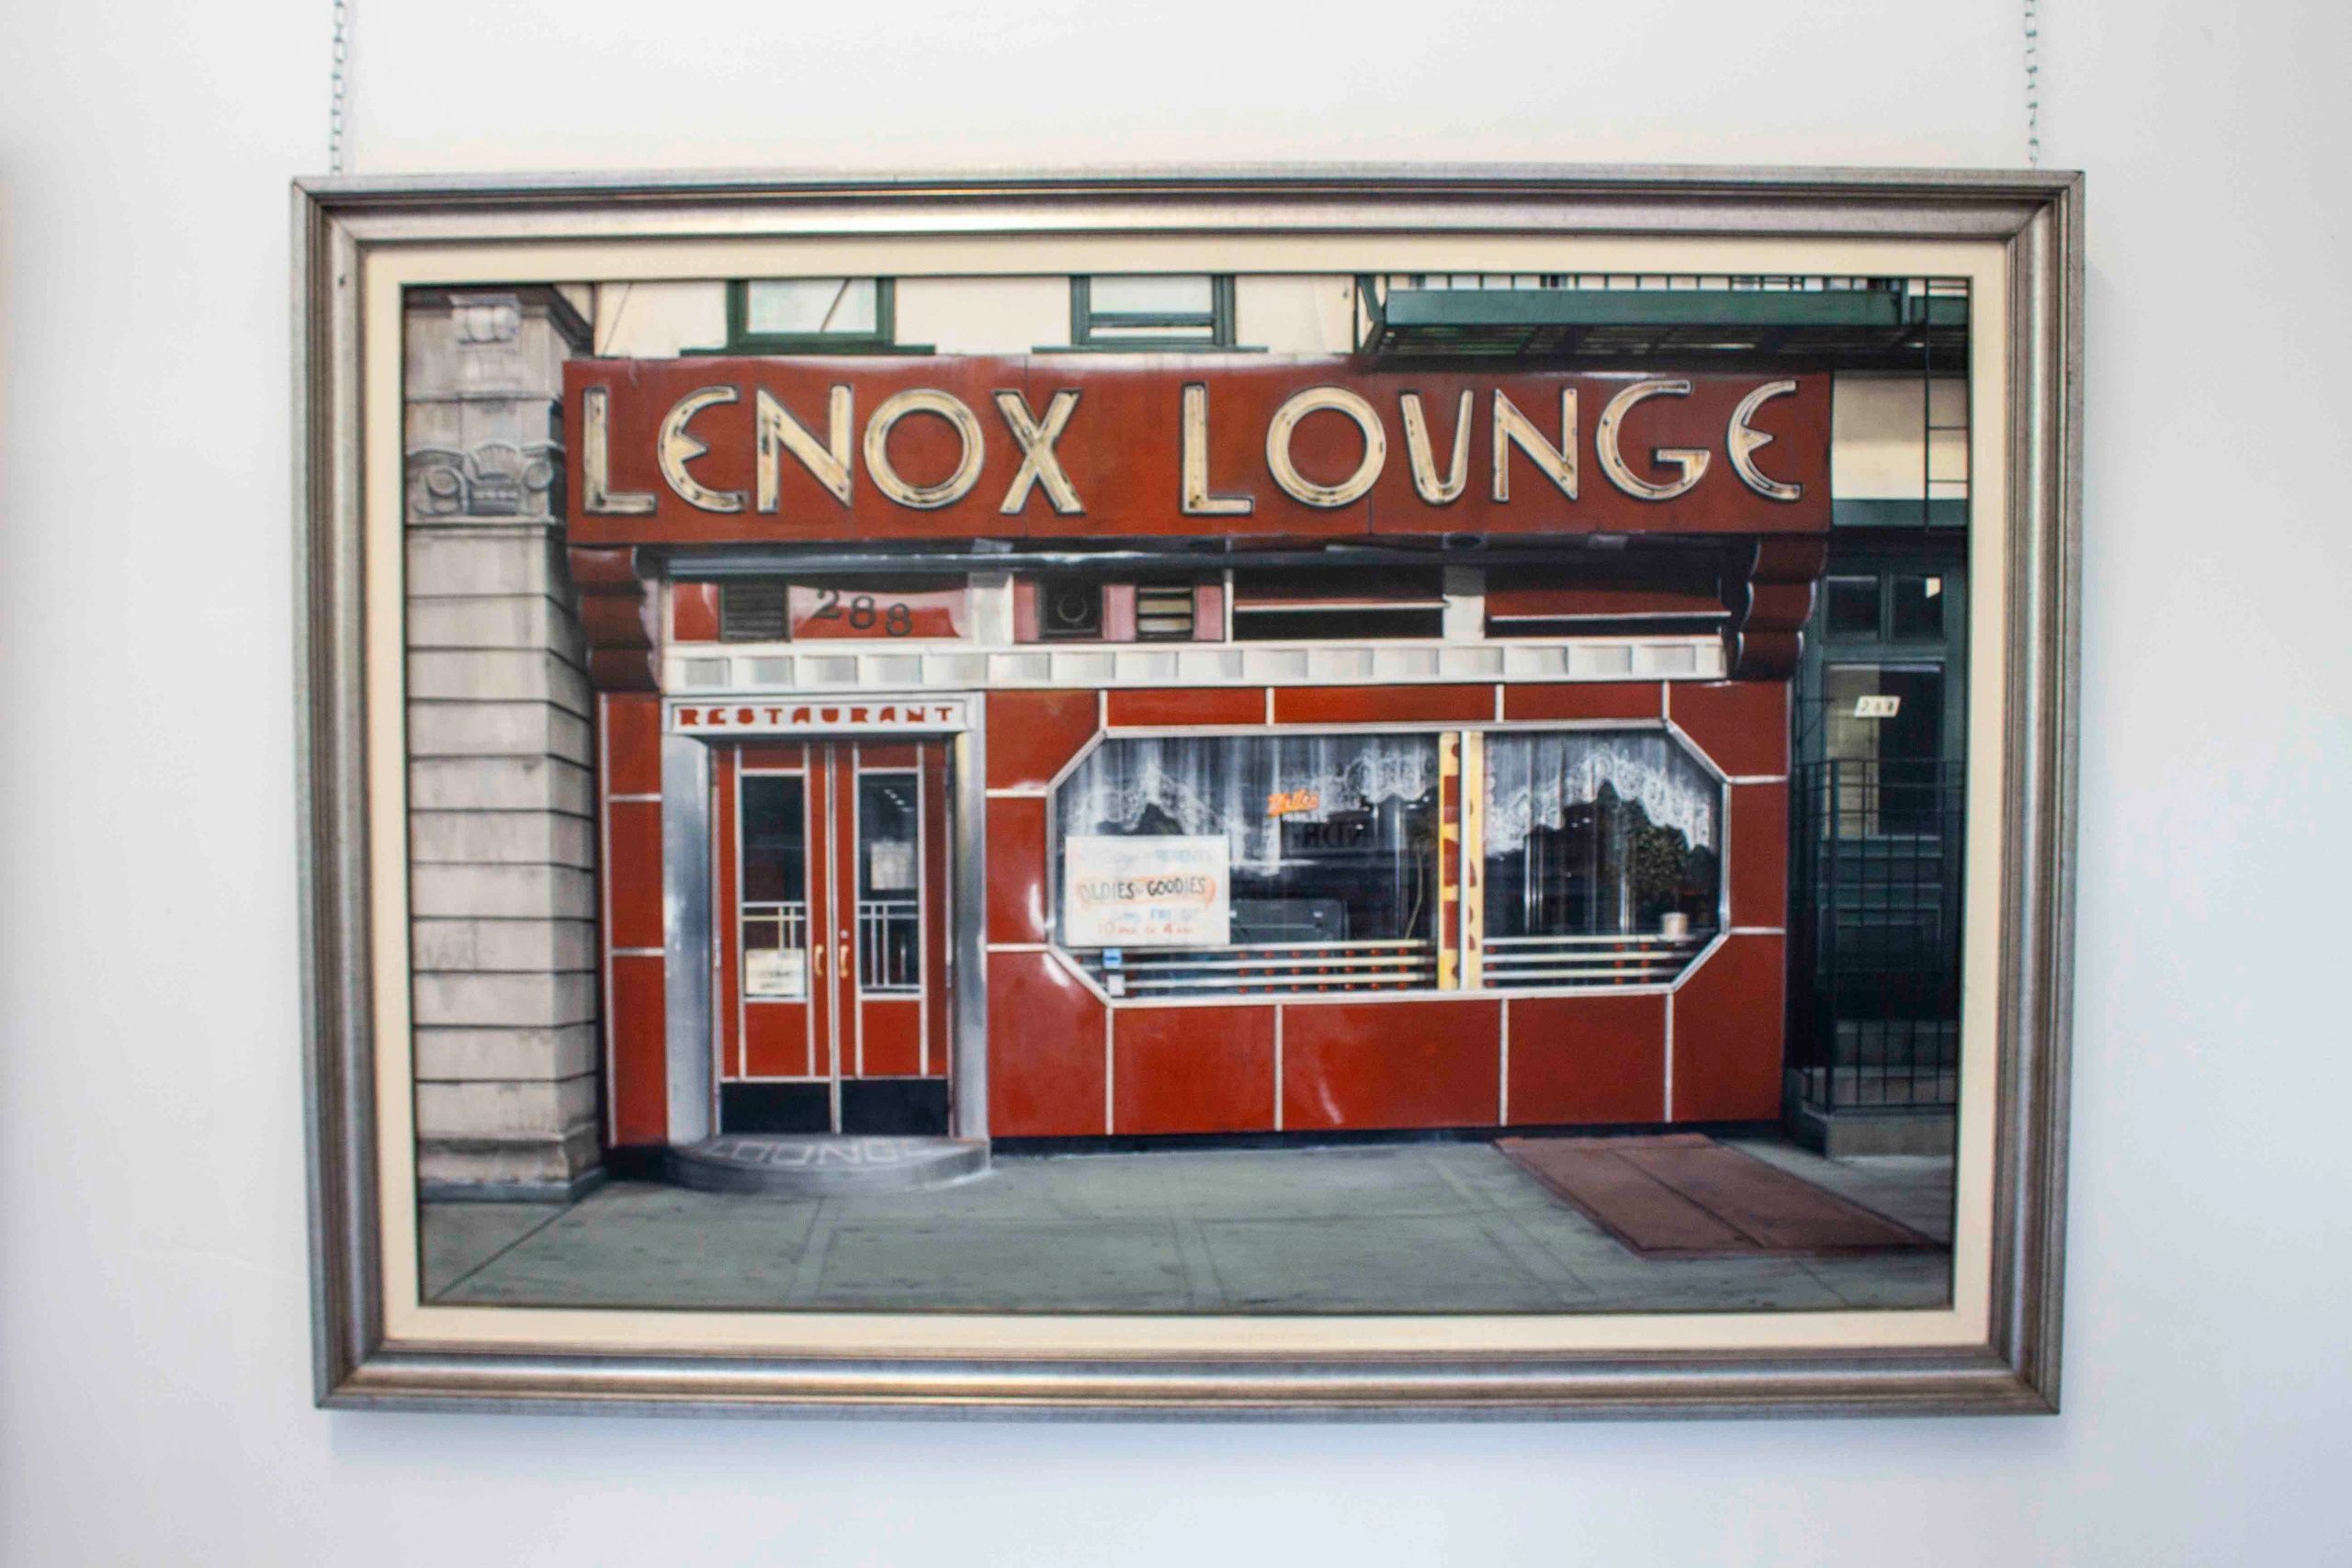 Scott Steele painting of Lenox Lounge in New York.